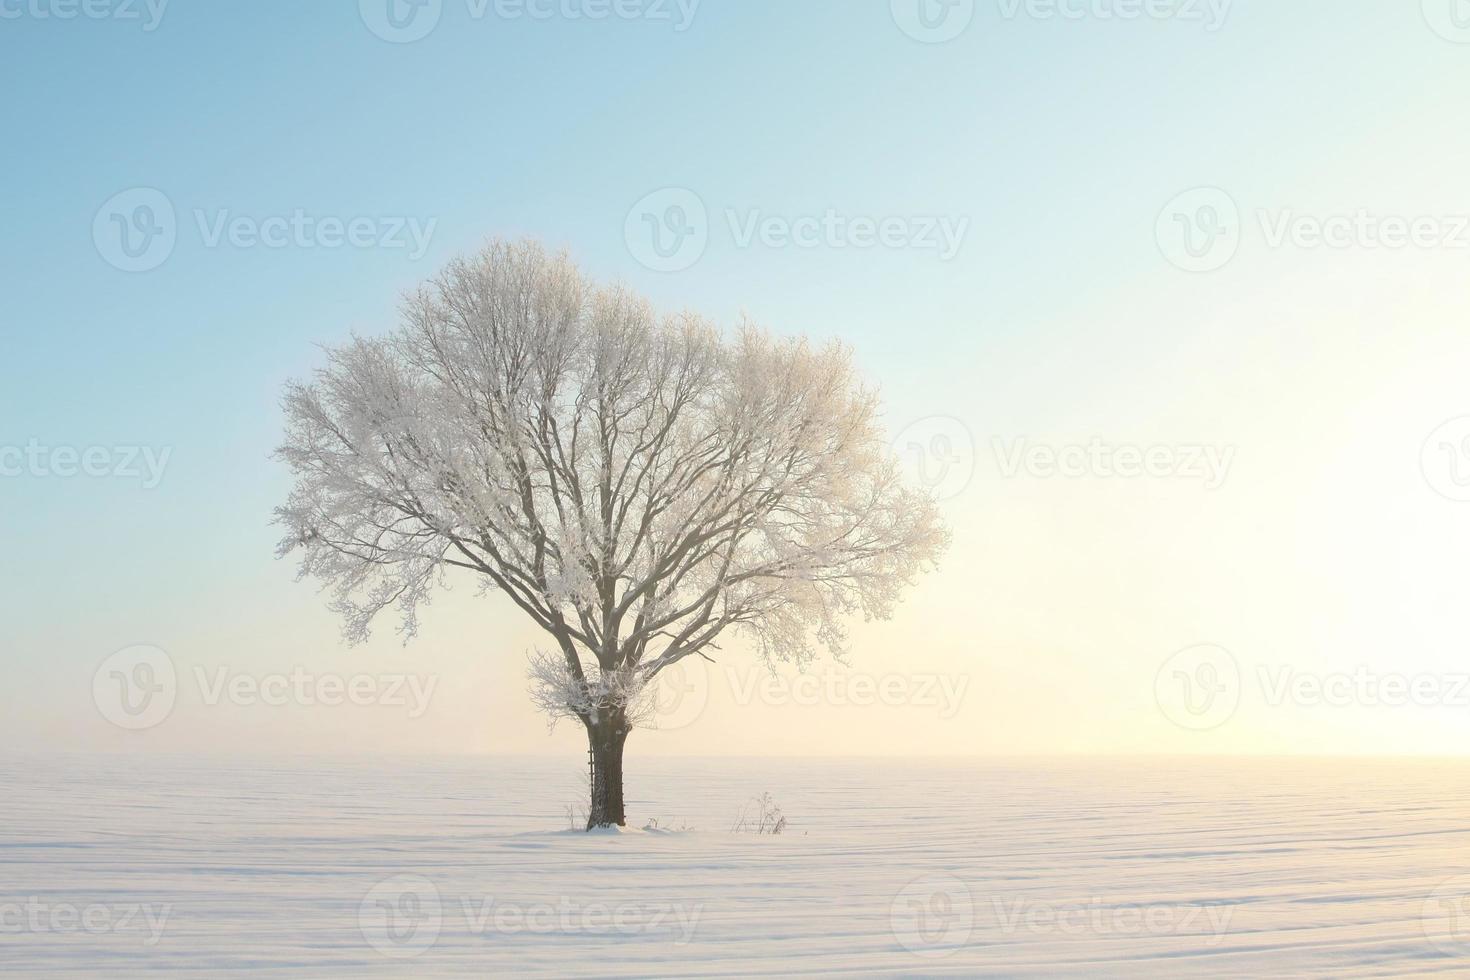 enkele frosted boom in de sneeuw bij zonsopgang foto